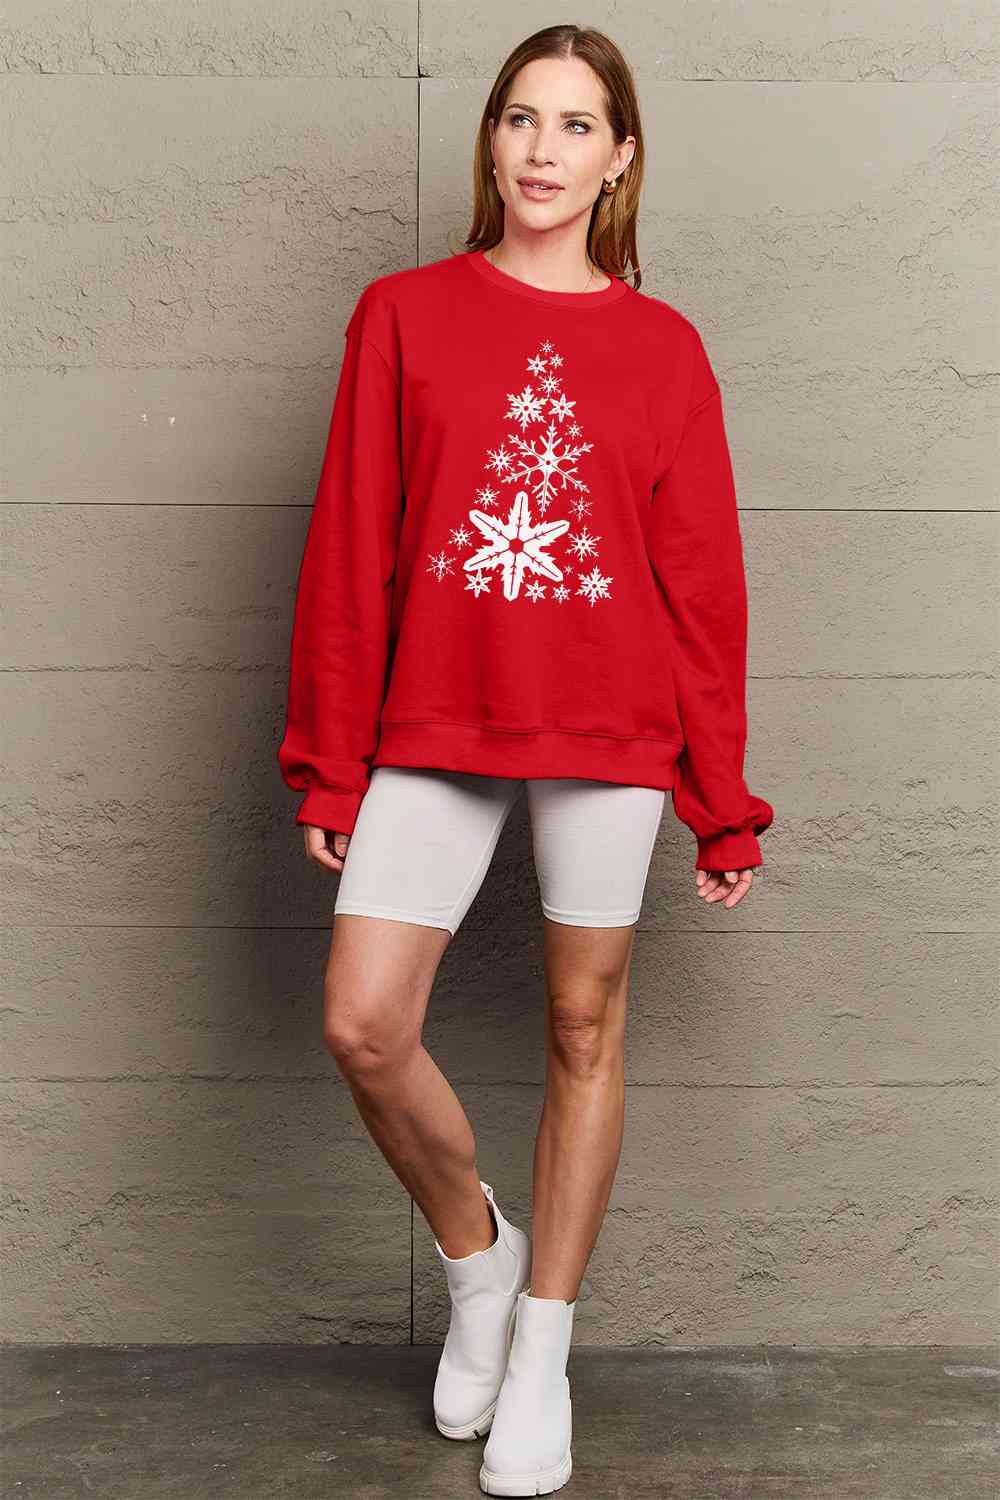 Simply Love Full Size Snowflake Christmas Tree Graphic Sweatshirt